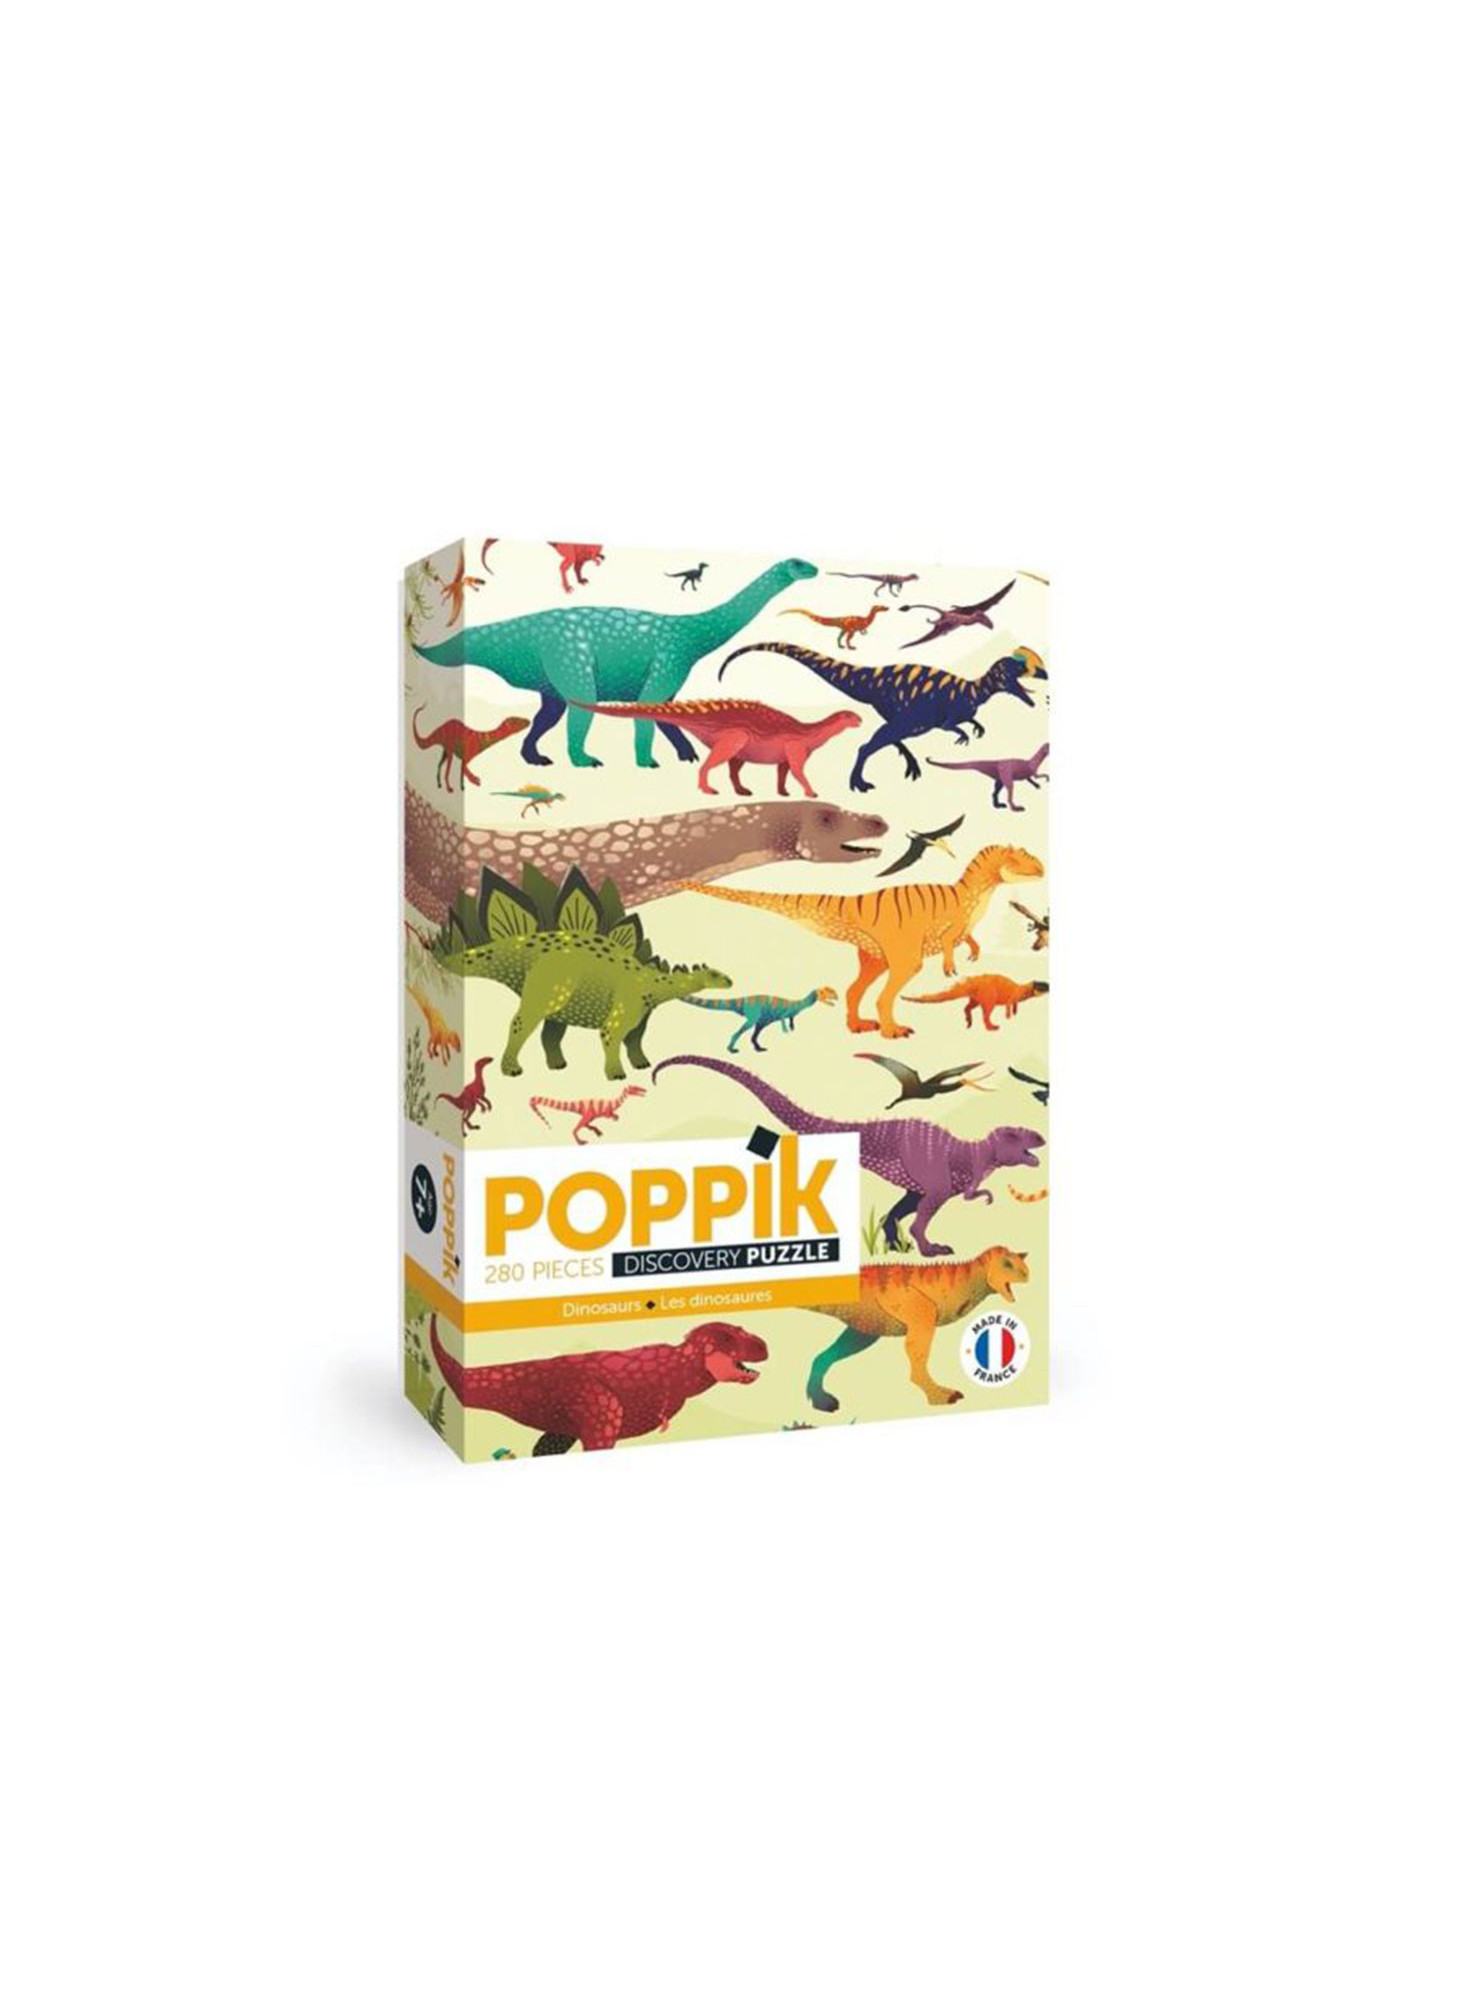 Poppik Puzzle Educativo 280 Pz - Dinosaurs - Poppik